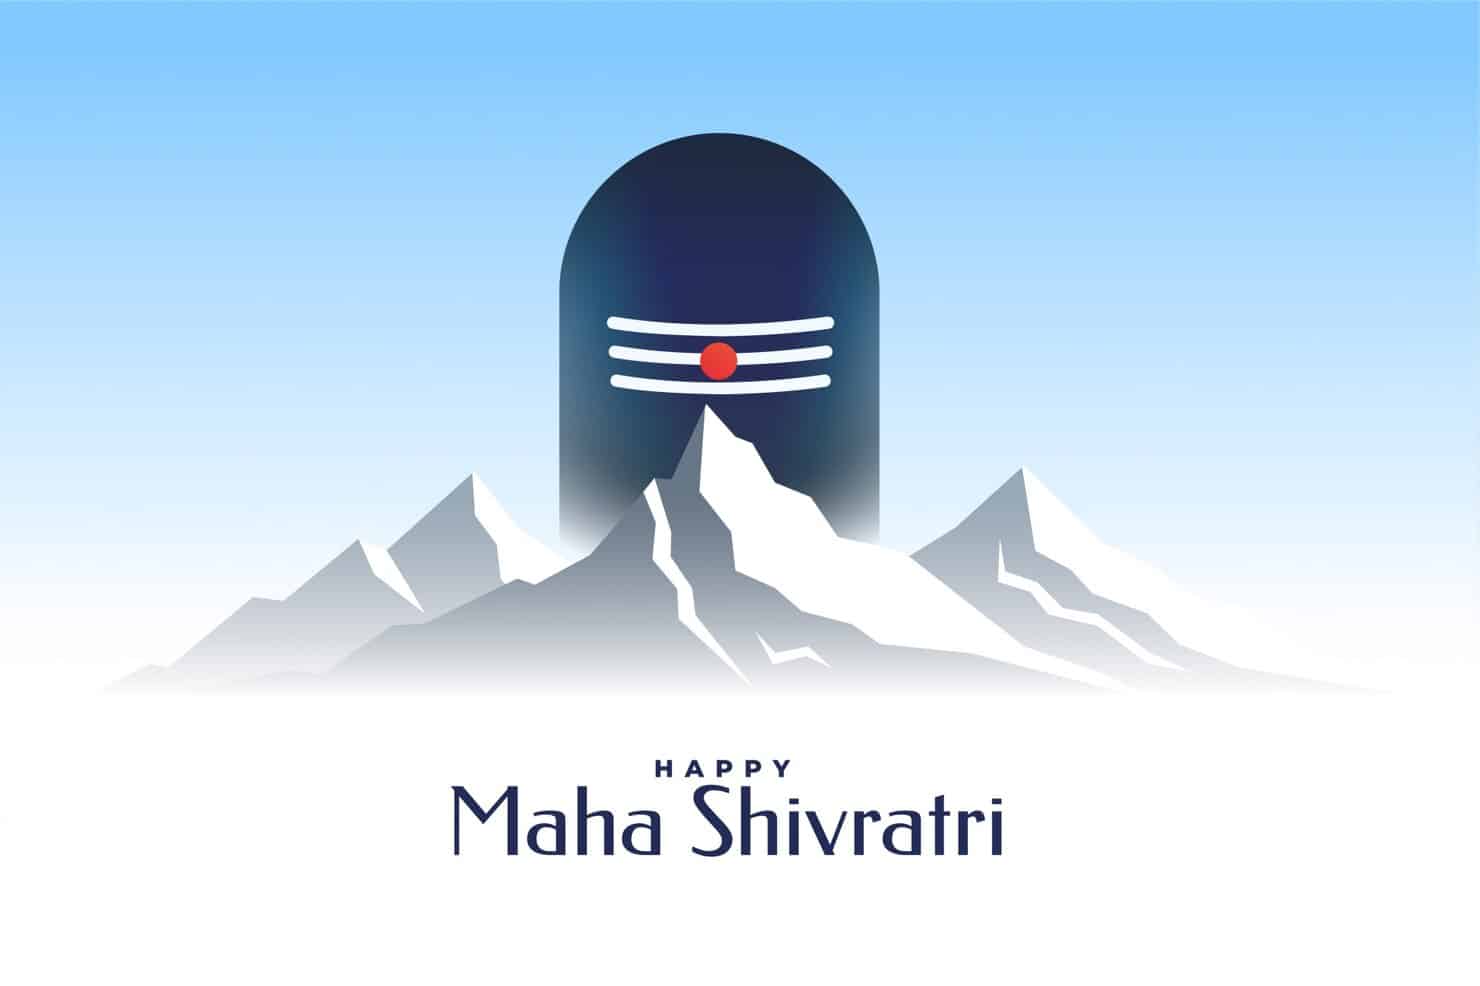 Happy Maha Shivratri Images